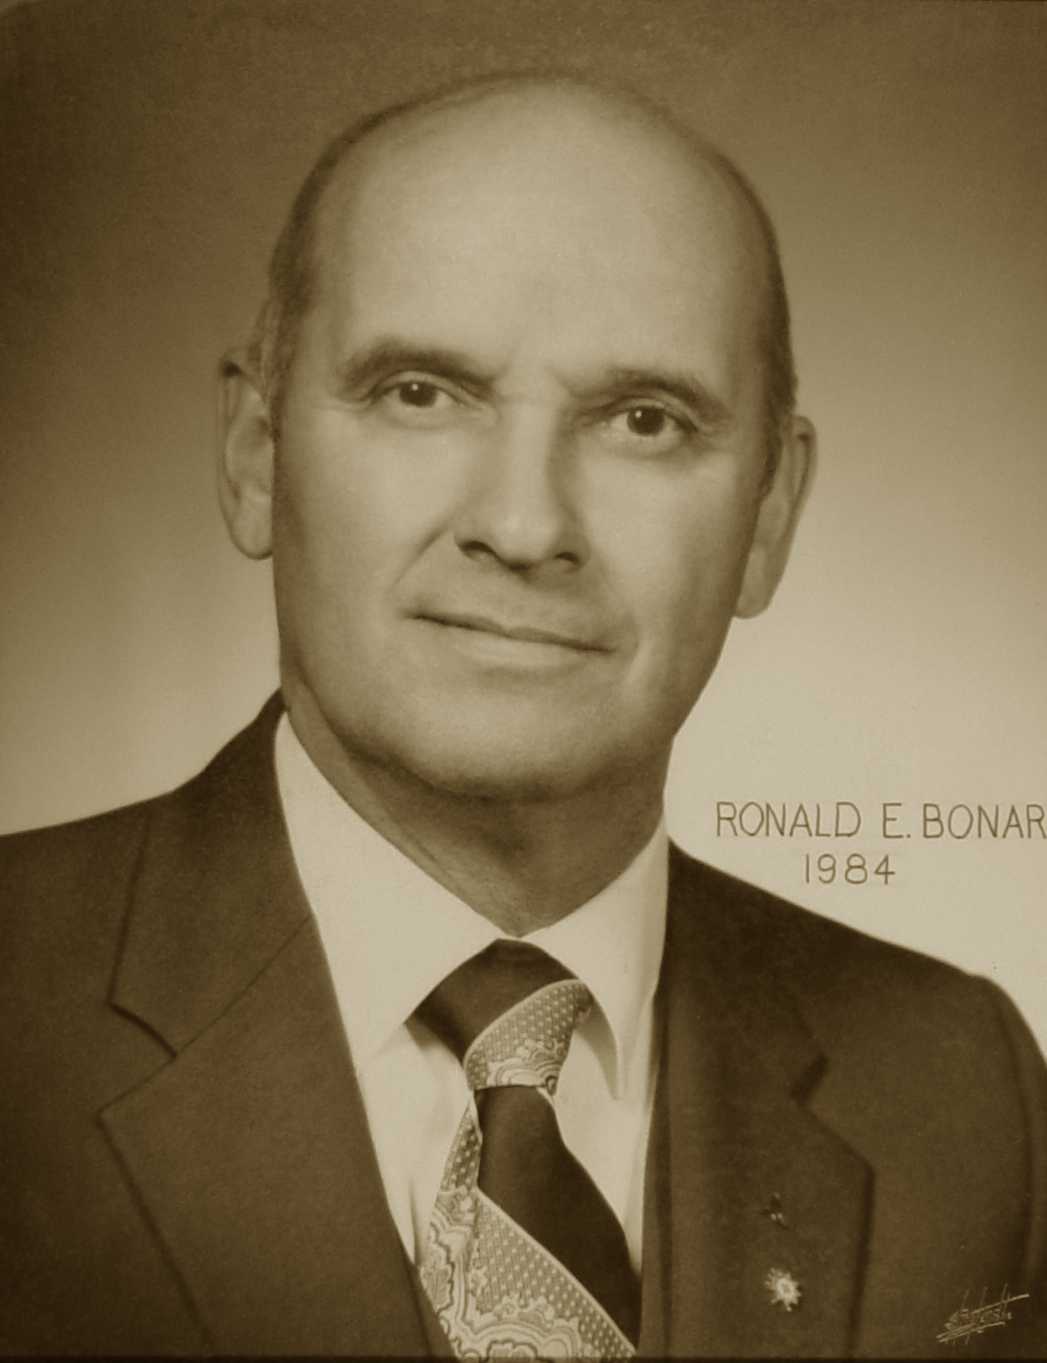 Ronald E. Bonar, 1984